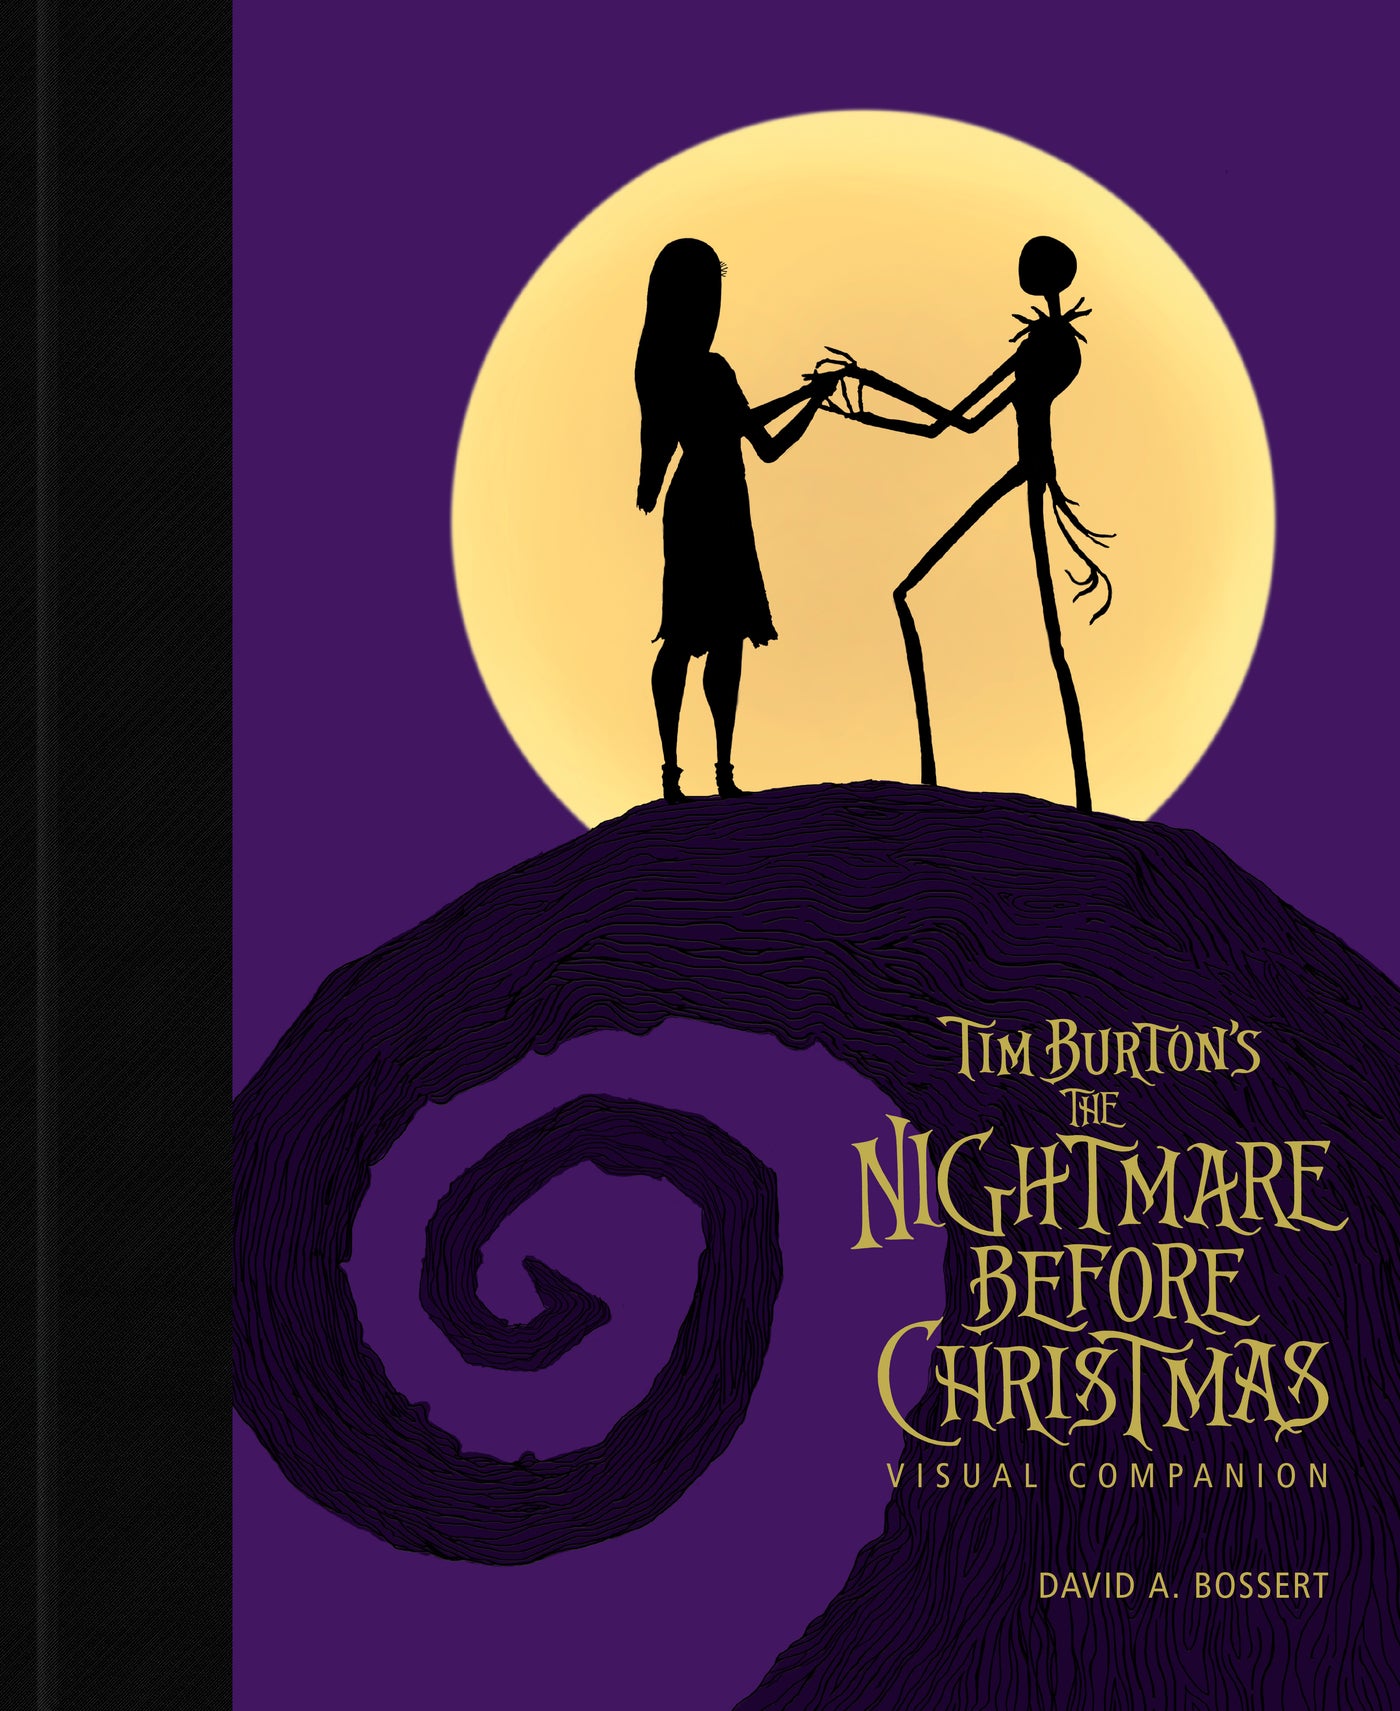 Disney: Tim Burton's The Nightmare Before Christmas: The 13 Days